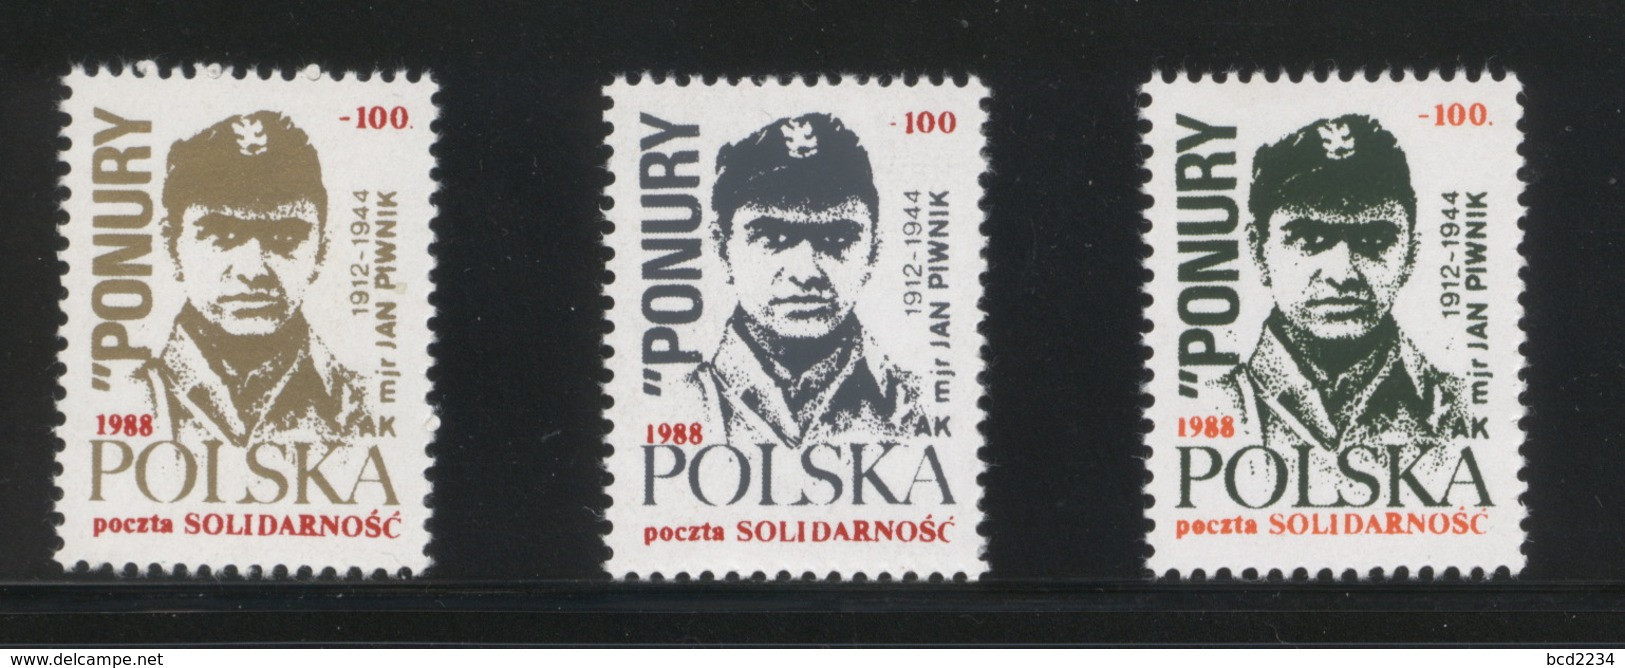 POLAND SOLIDARNOSC JAN PIWNIK WW2 POLICE & SOLDIER AGAINST NAZI GERMANY & RUSSIA SET OF 3 GOVT EXILE FRANCE POLISH ARMY - Viñetas Solidarnosc